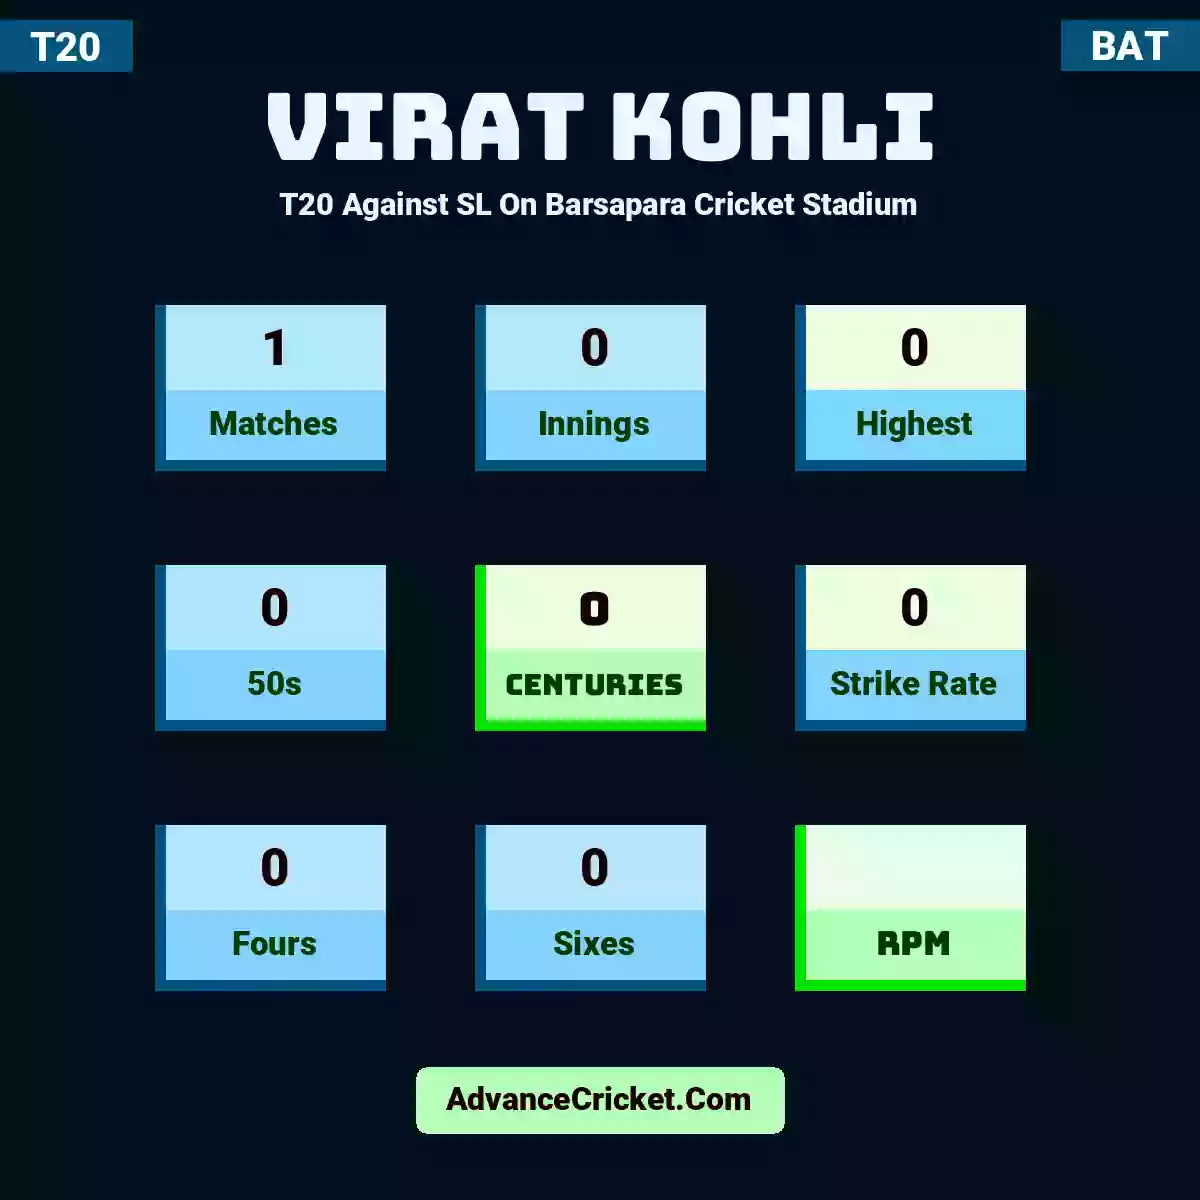 Virat Kohli T20  Against SL On Barsapara Cricket Stadium, Virat Kohli played 1 matches, scored 0 runs as highest, 0 half-centuries, and 0 centuries, with a strike rate of 0. V.Kohli hit 0 fours and 0 sixes.